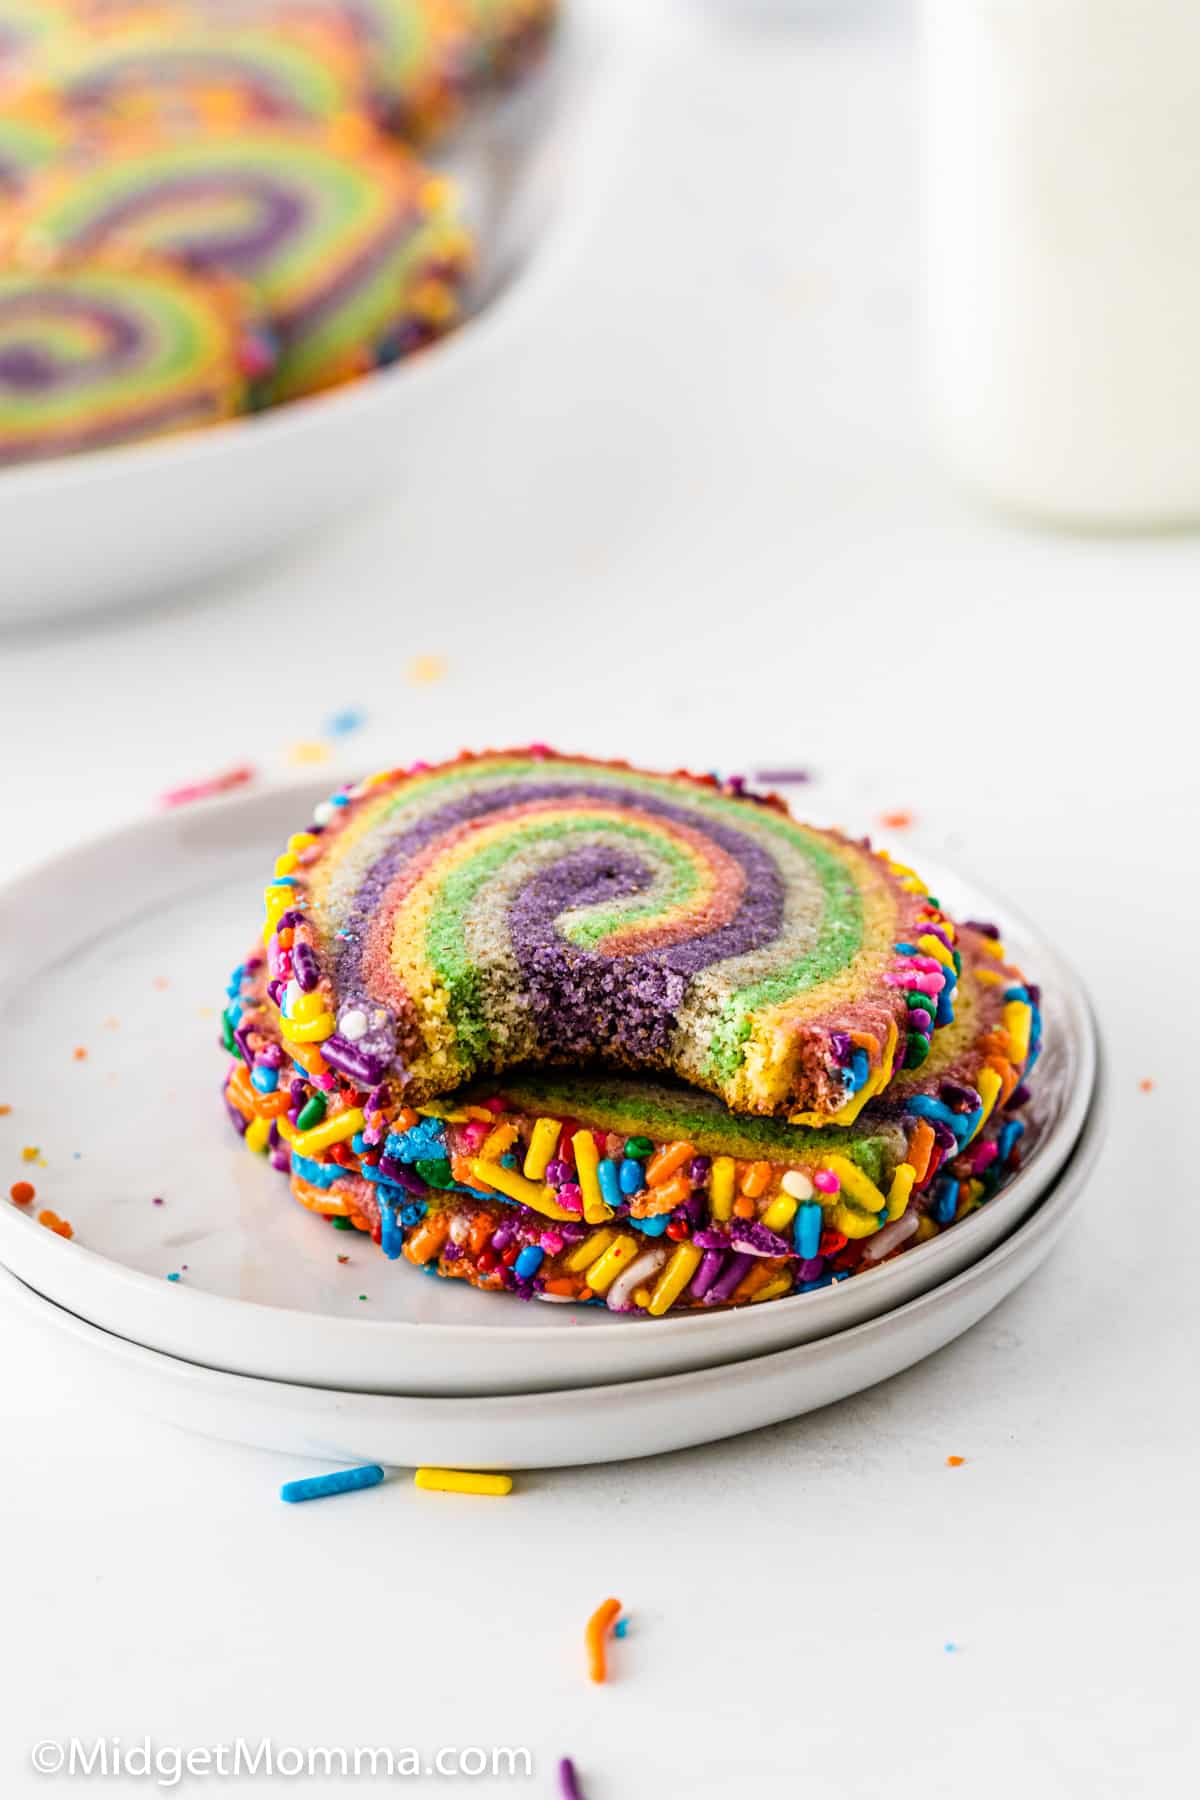 Rainbow Pinwheel Cookies Recipe